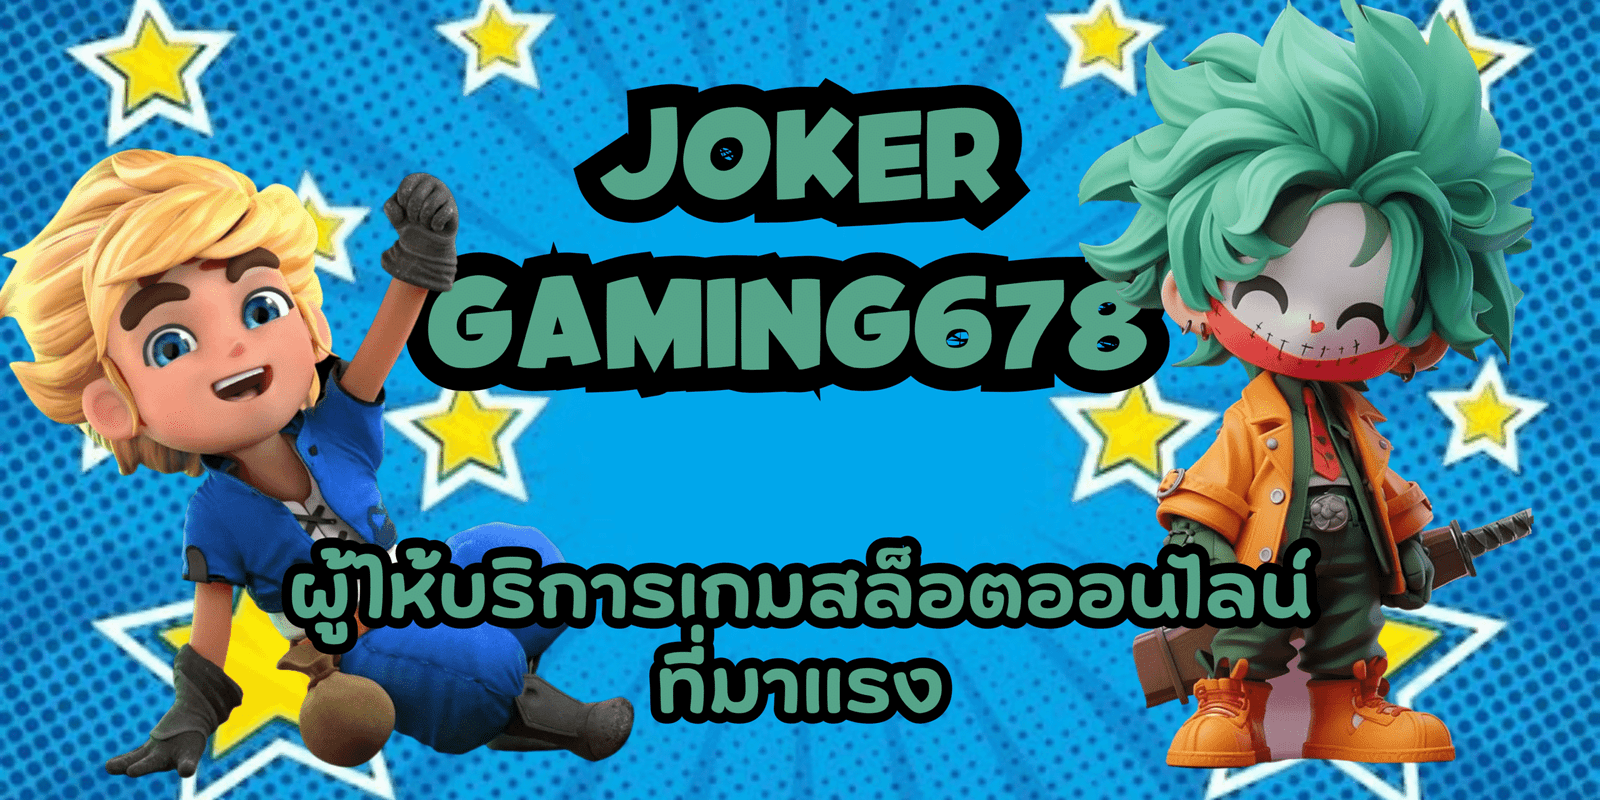 joker-gaming678-สมัครสมาชิก